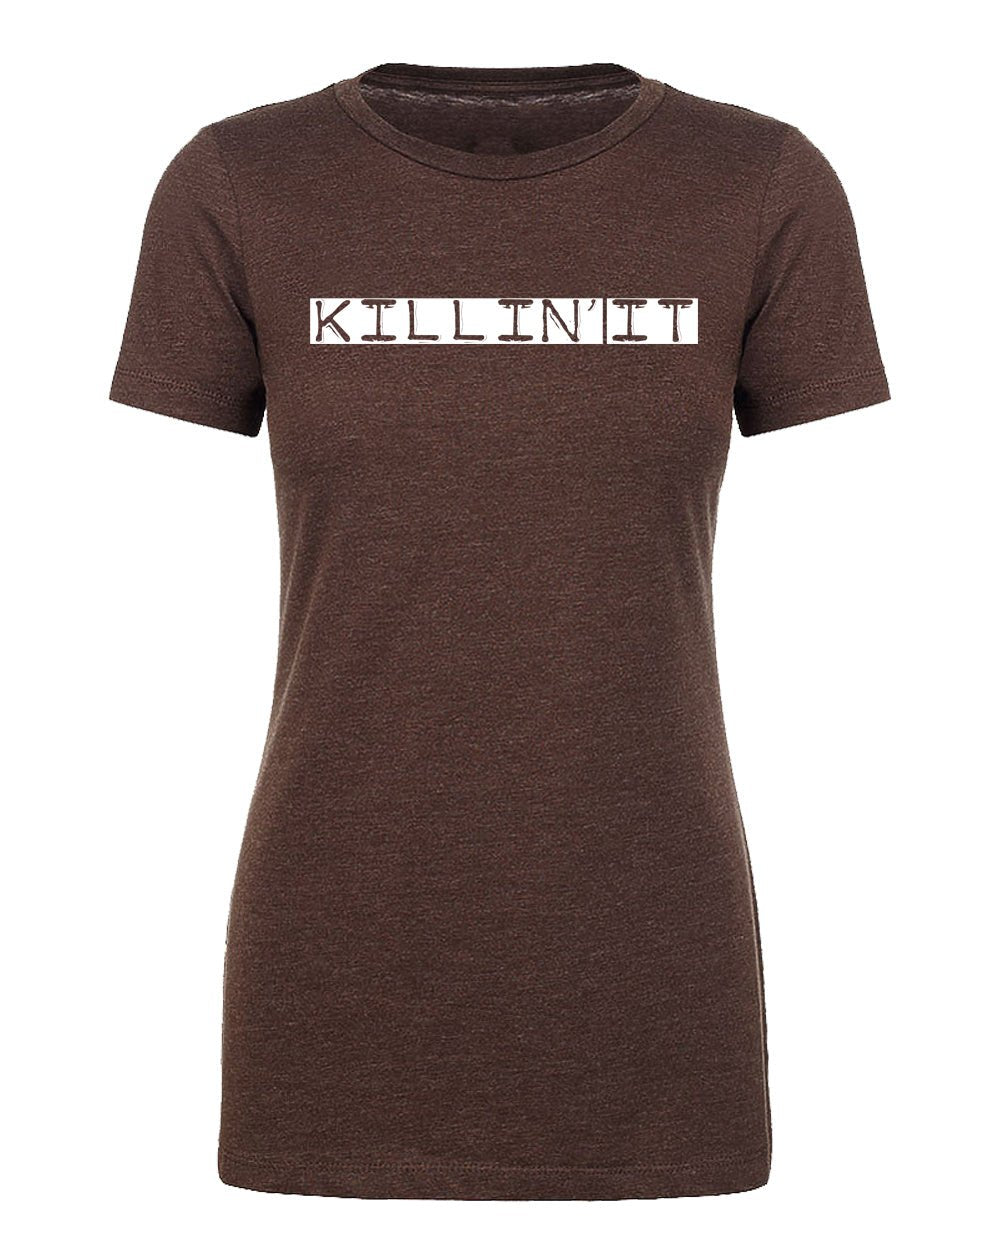 Shirt - Killin It -Cool T-shirts For Woman, Feminist Shirts